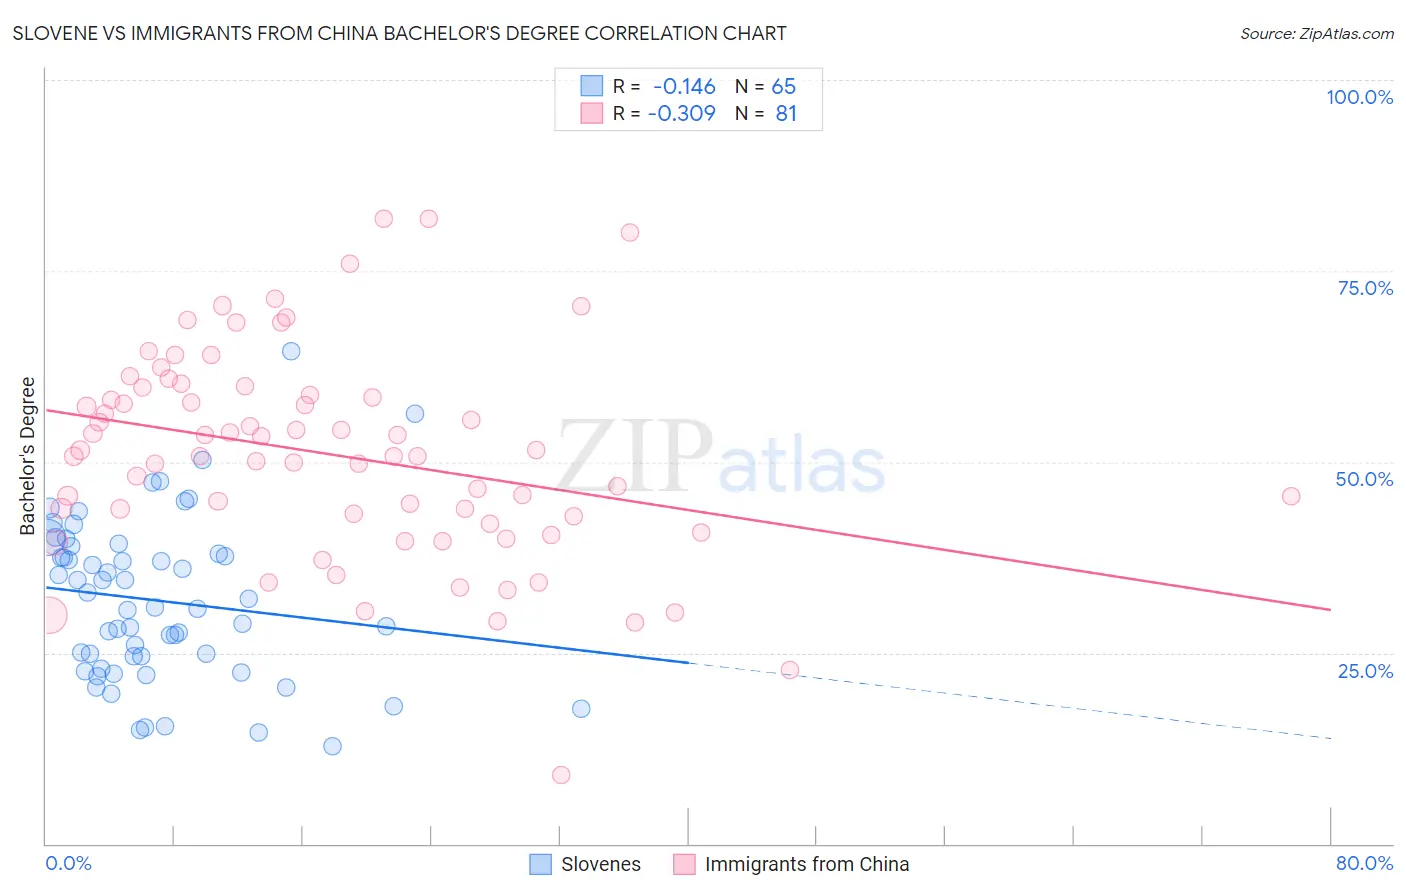 Slovene vs Immigrants from China Bachelor's Degree